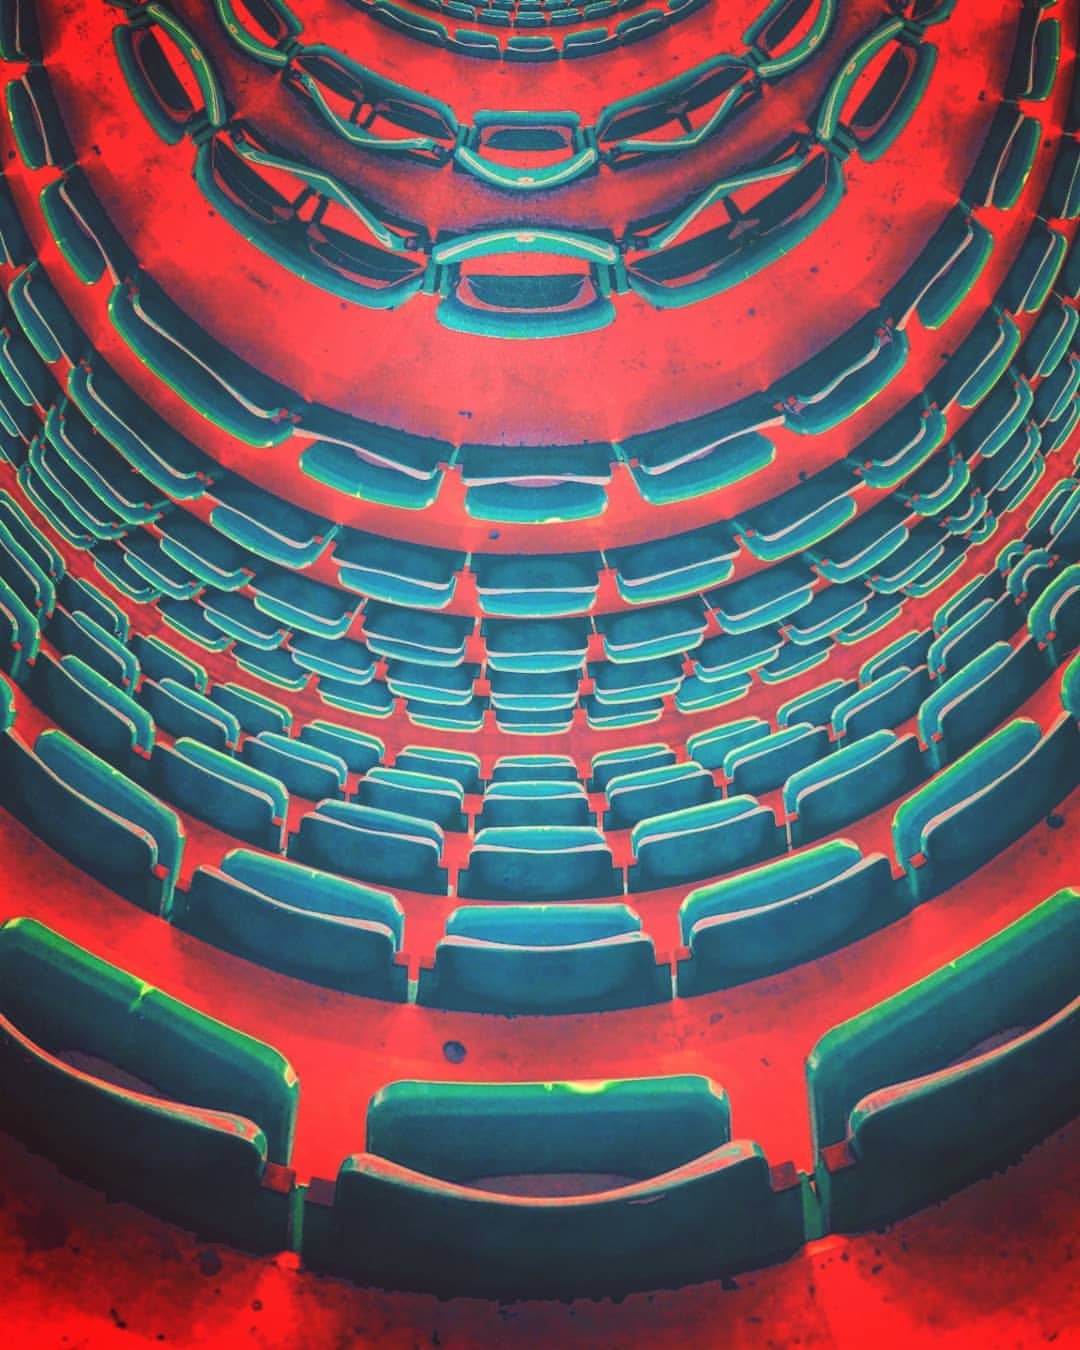 seats